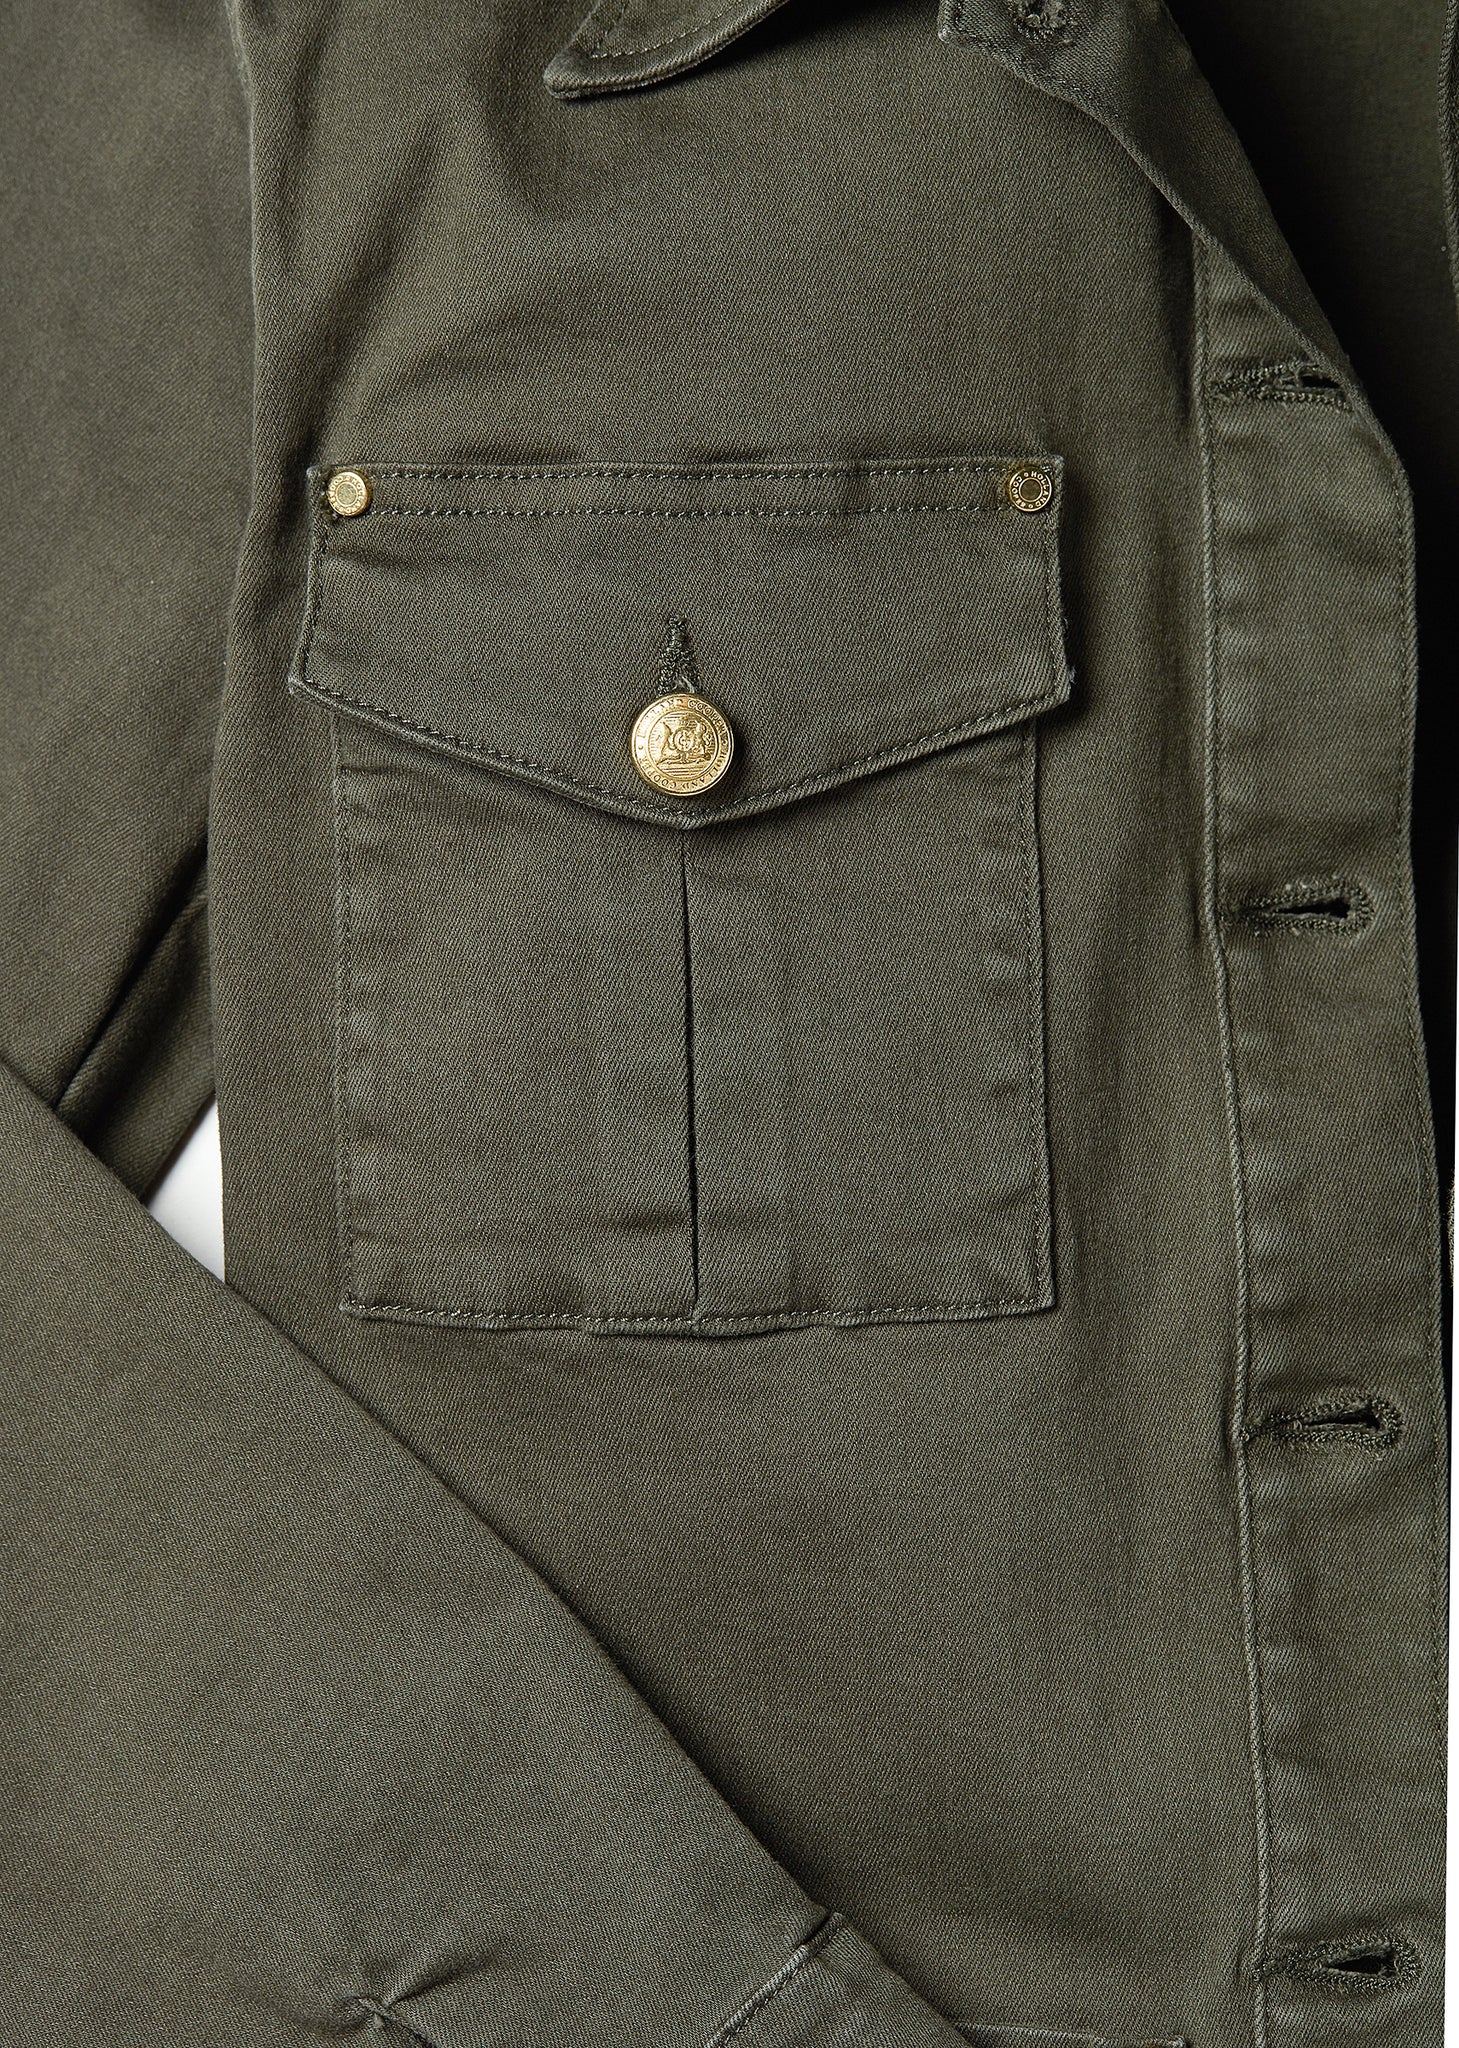 Artillery Jacket (Hunter Green) – Holland Cooper